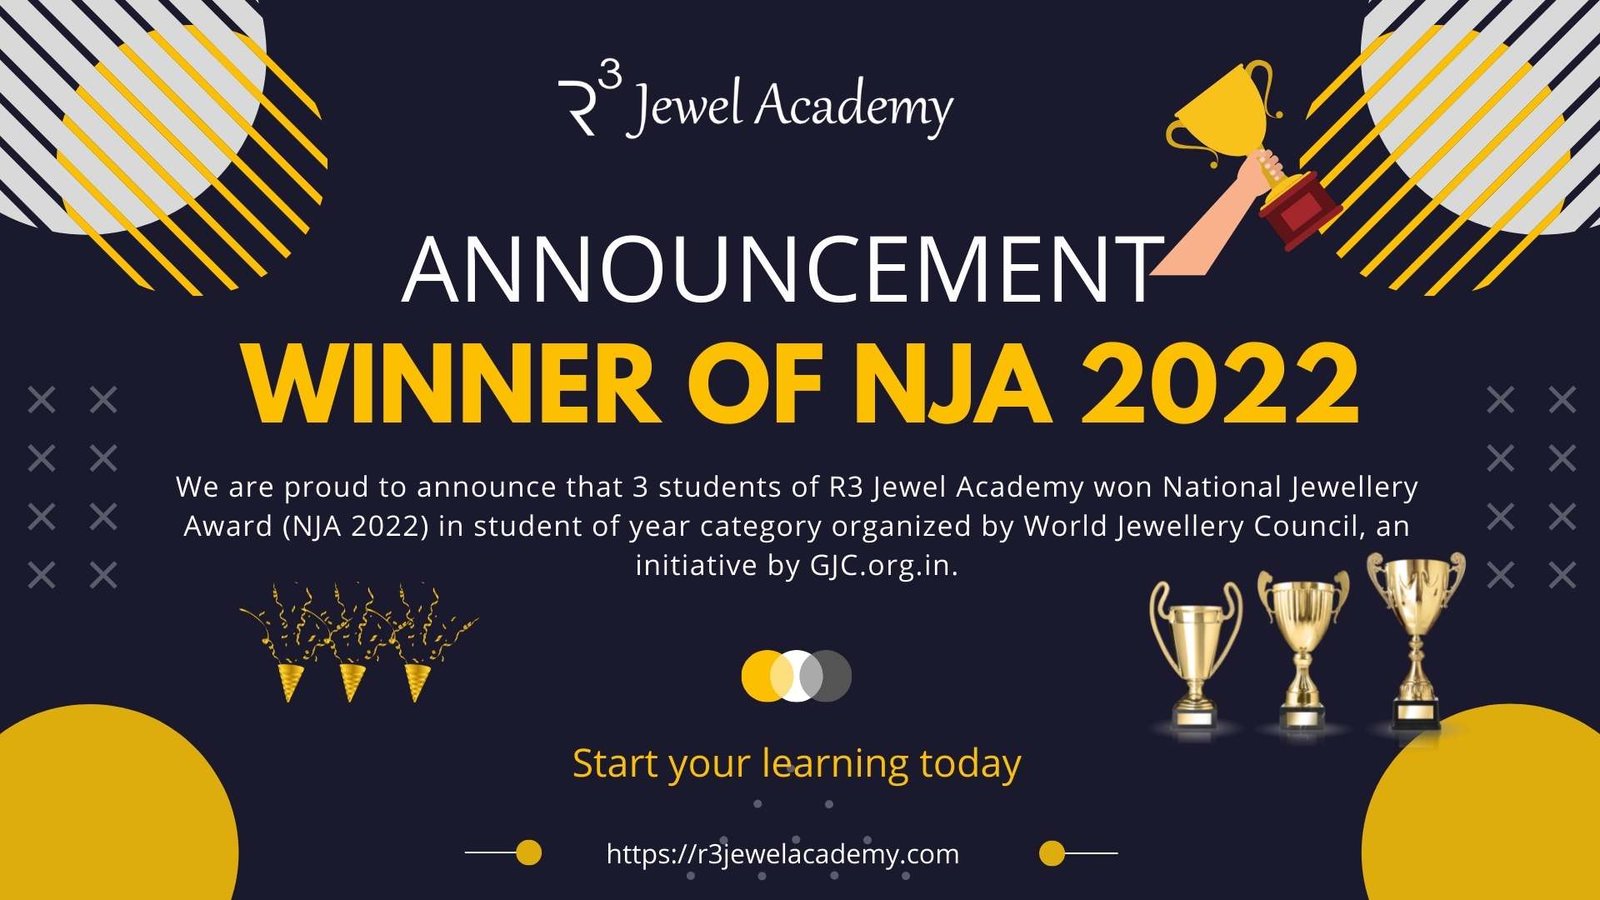 National jewellery award winner academy